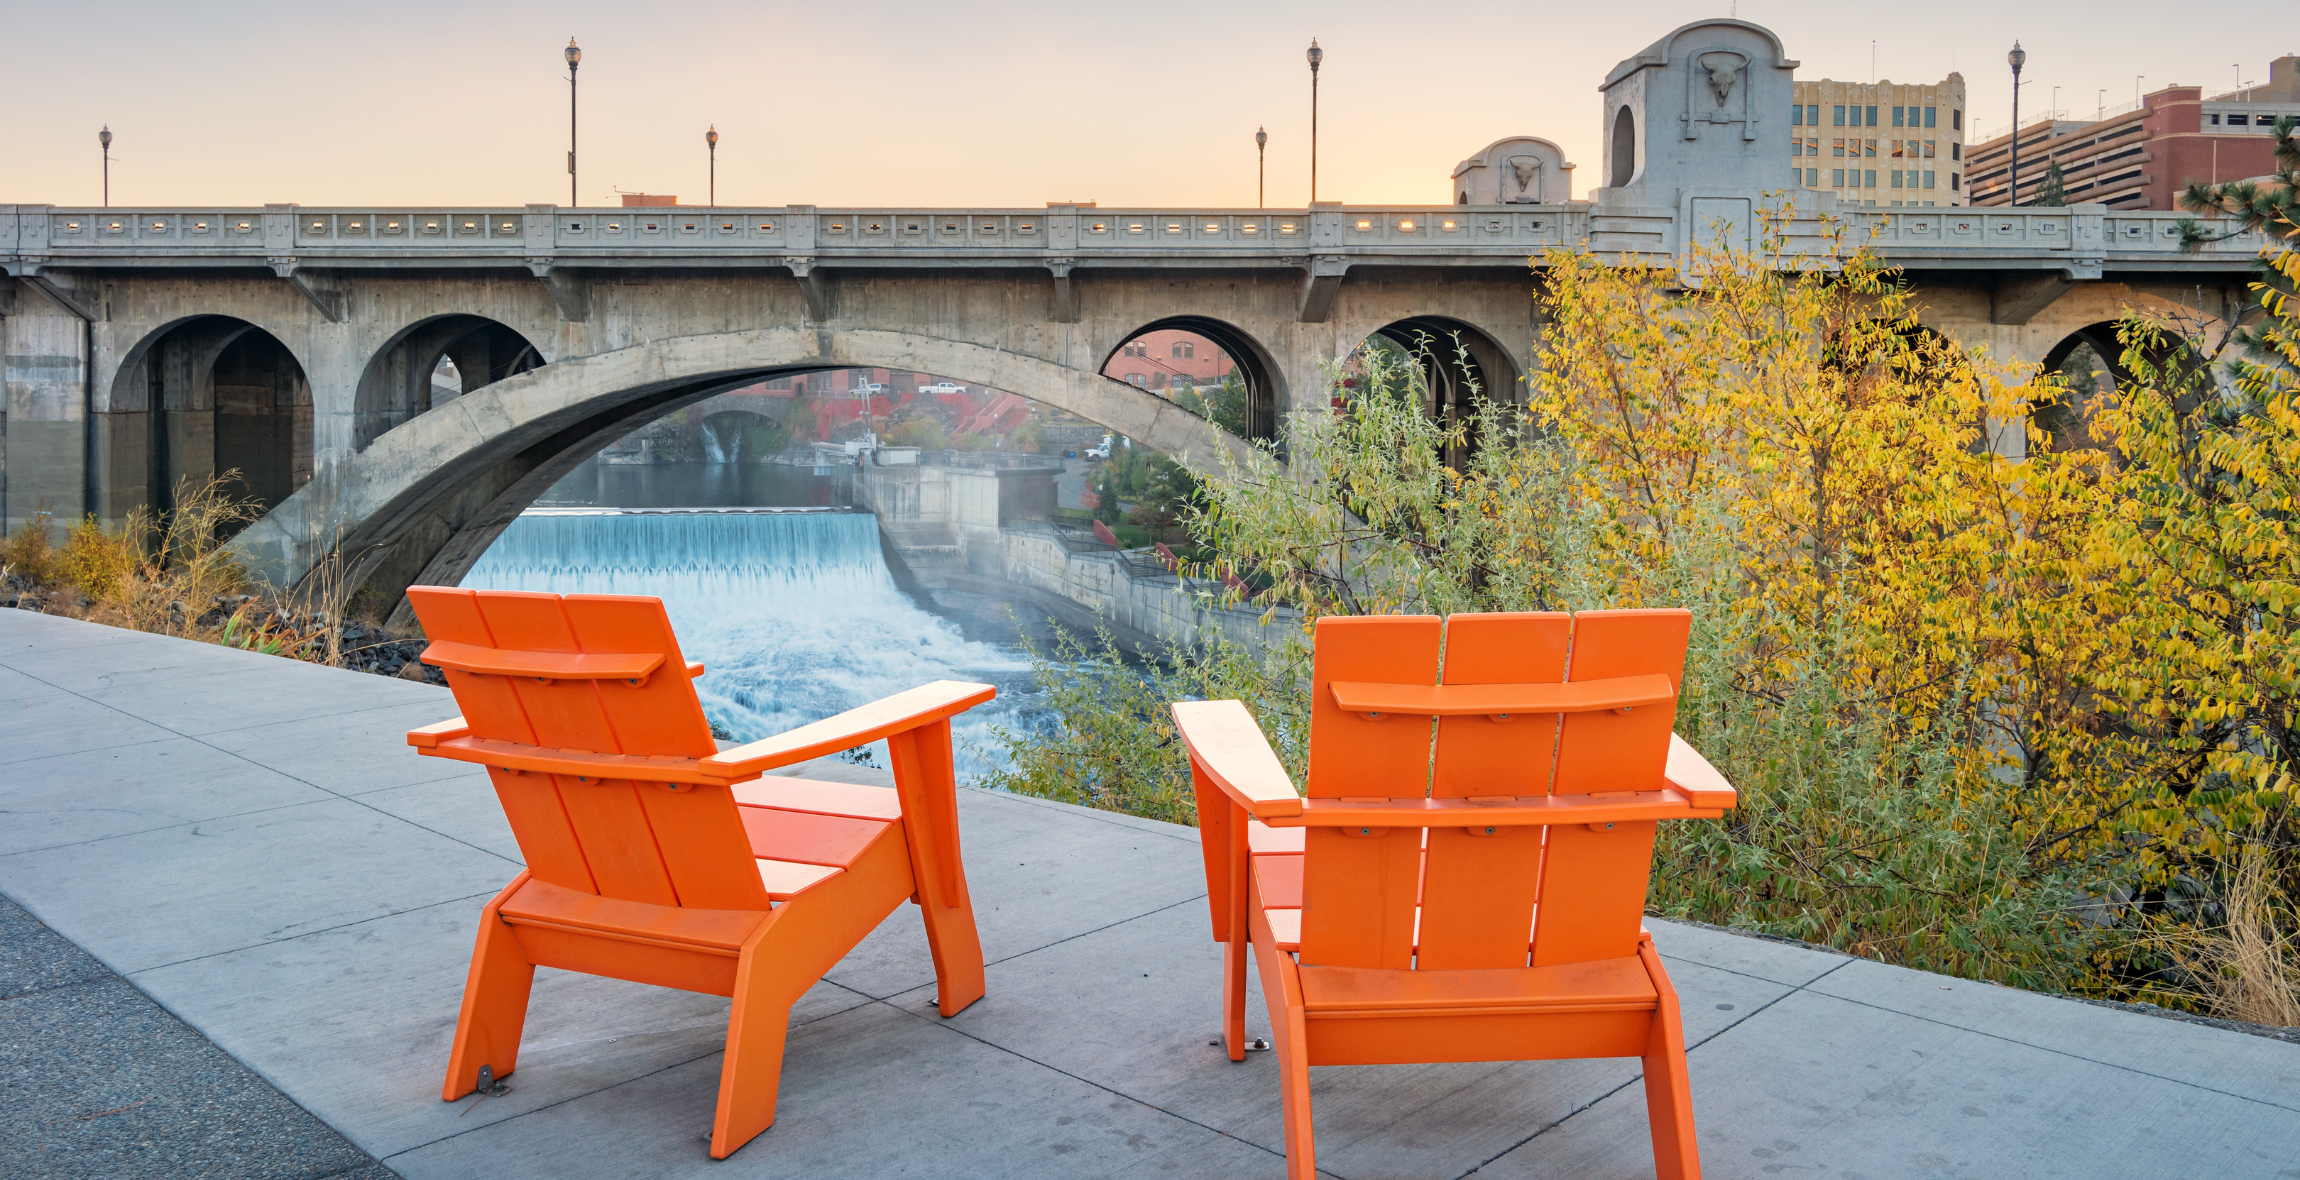 Chairs along the Spokane River promenade in downtown Spokane Washington